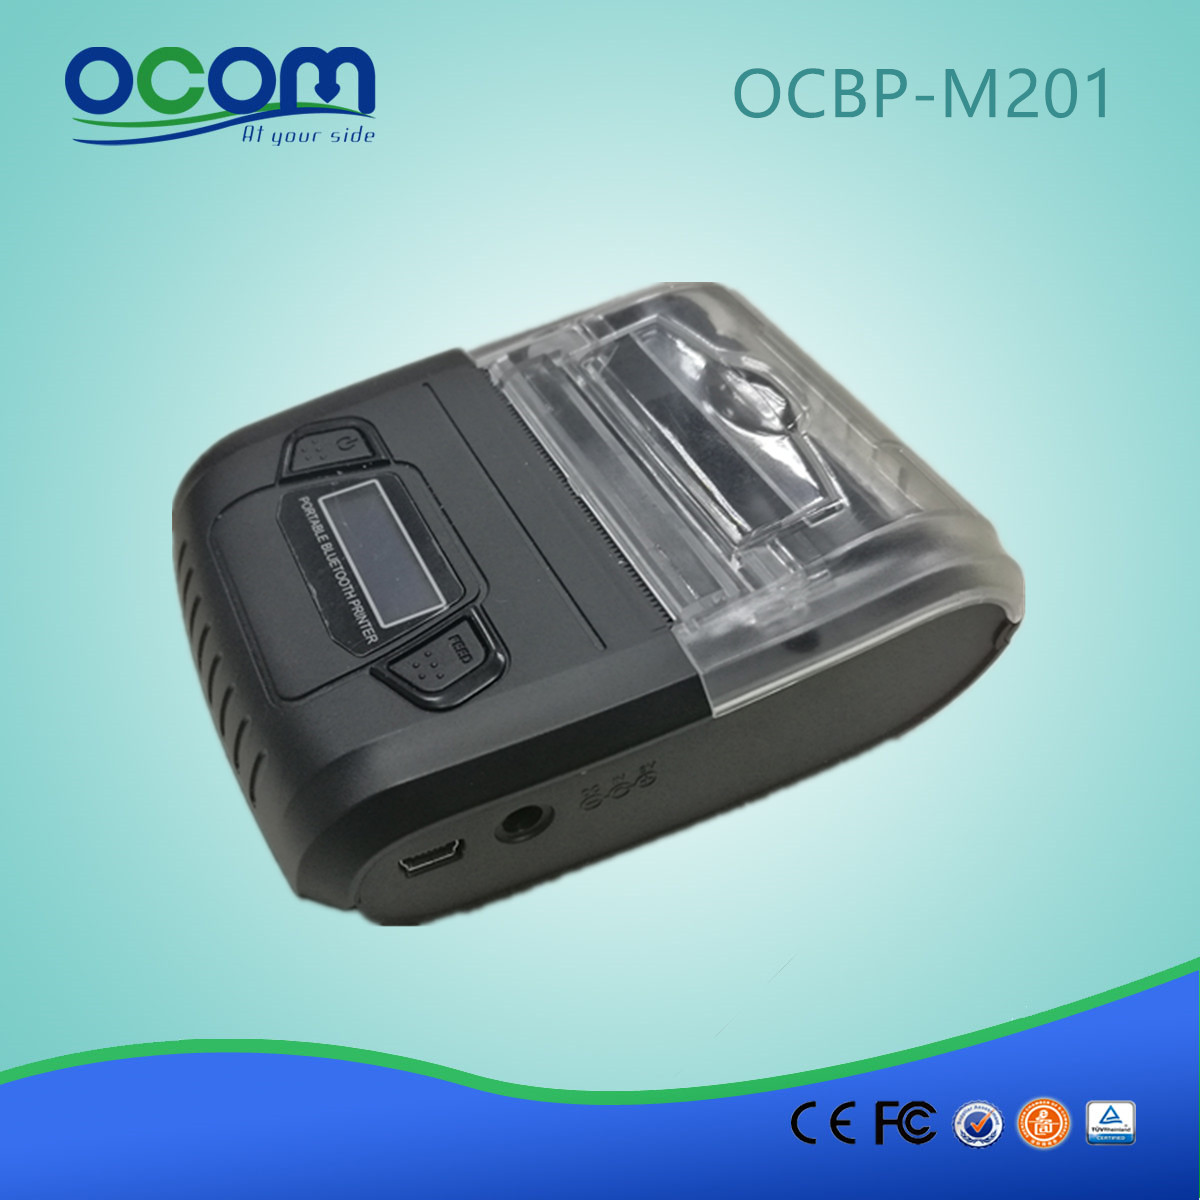 (OCBP-M201) China Cheap 58mm mini Bluetooth Thermal Label Printer